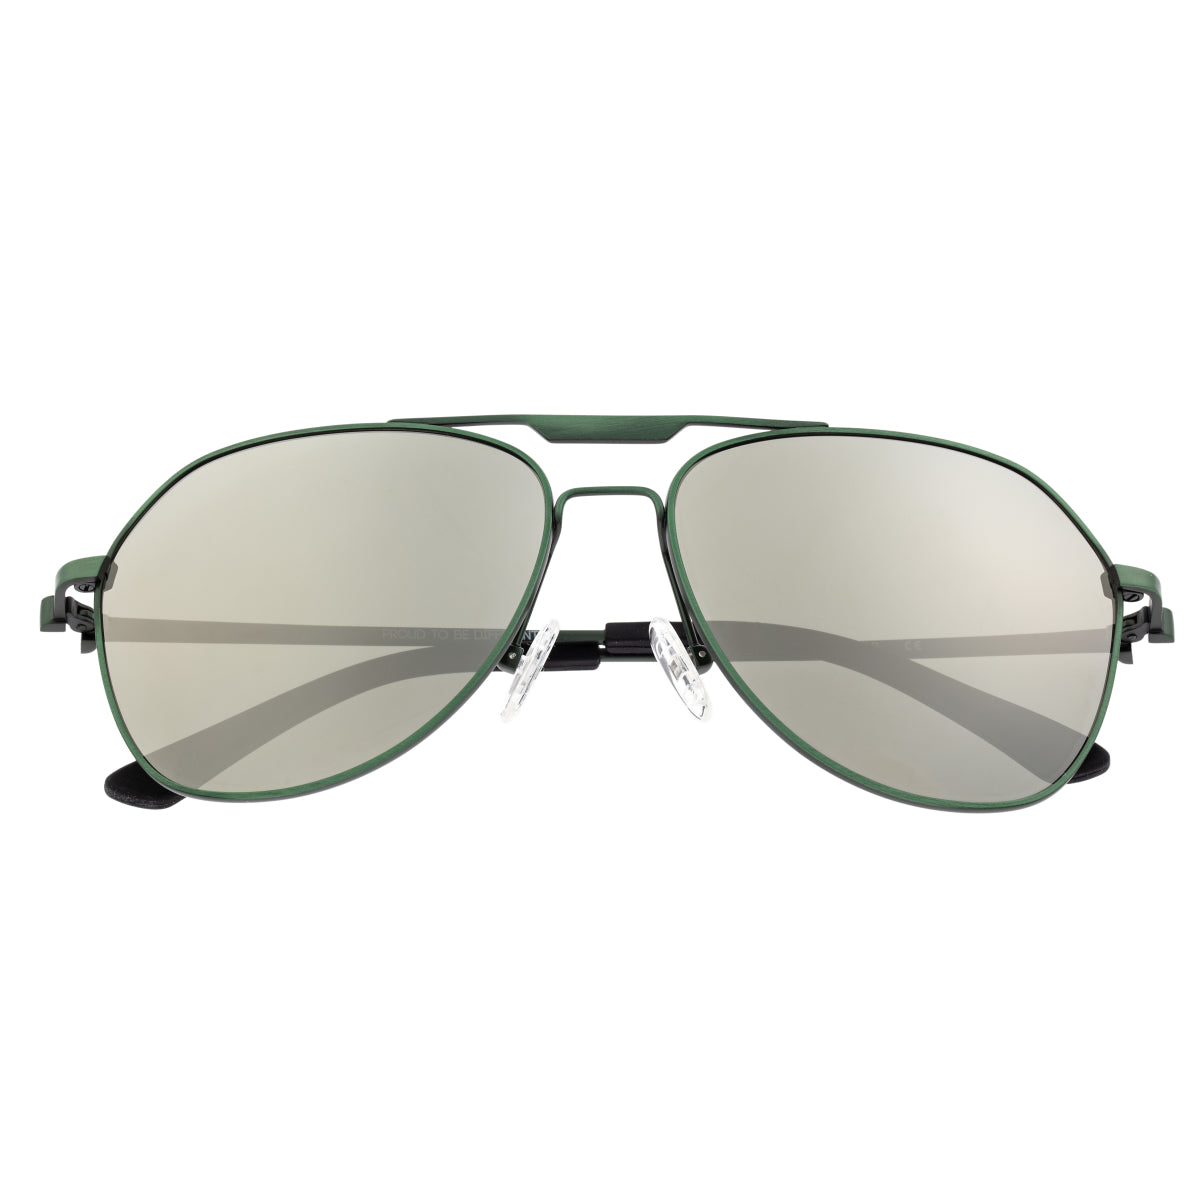 Breed Mount Titanium Polarized Sunglasses - Green/Silver - BSG056GN